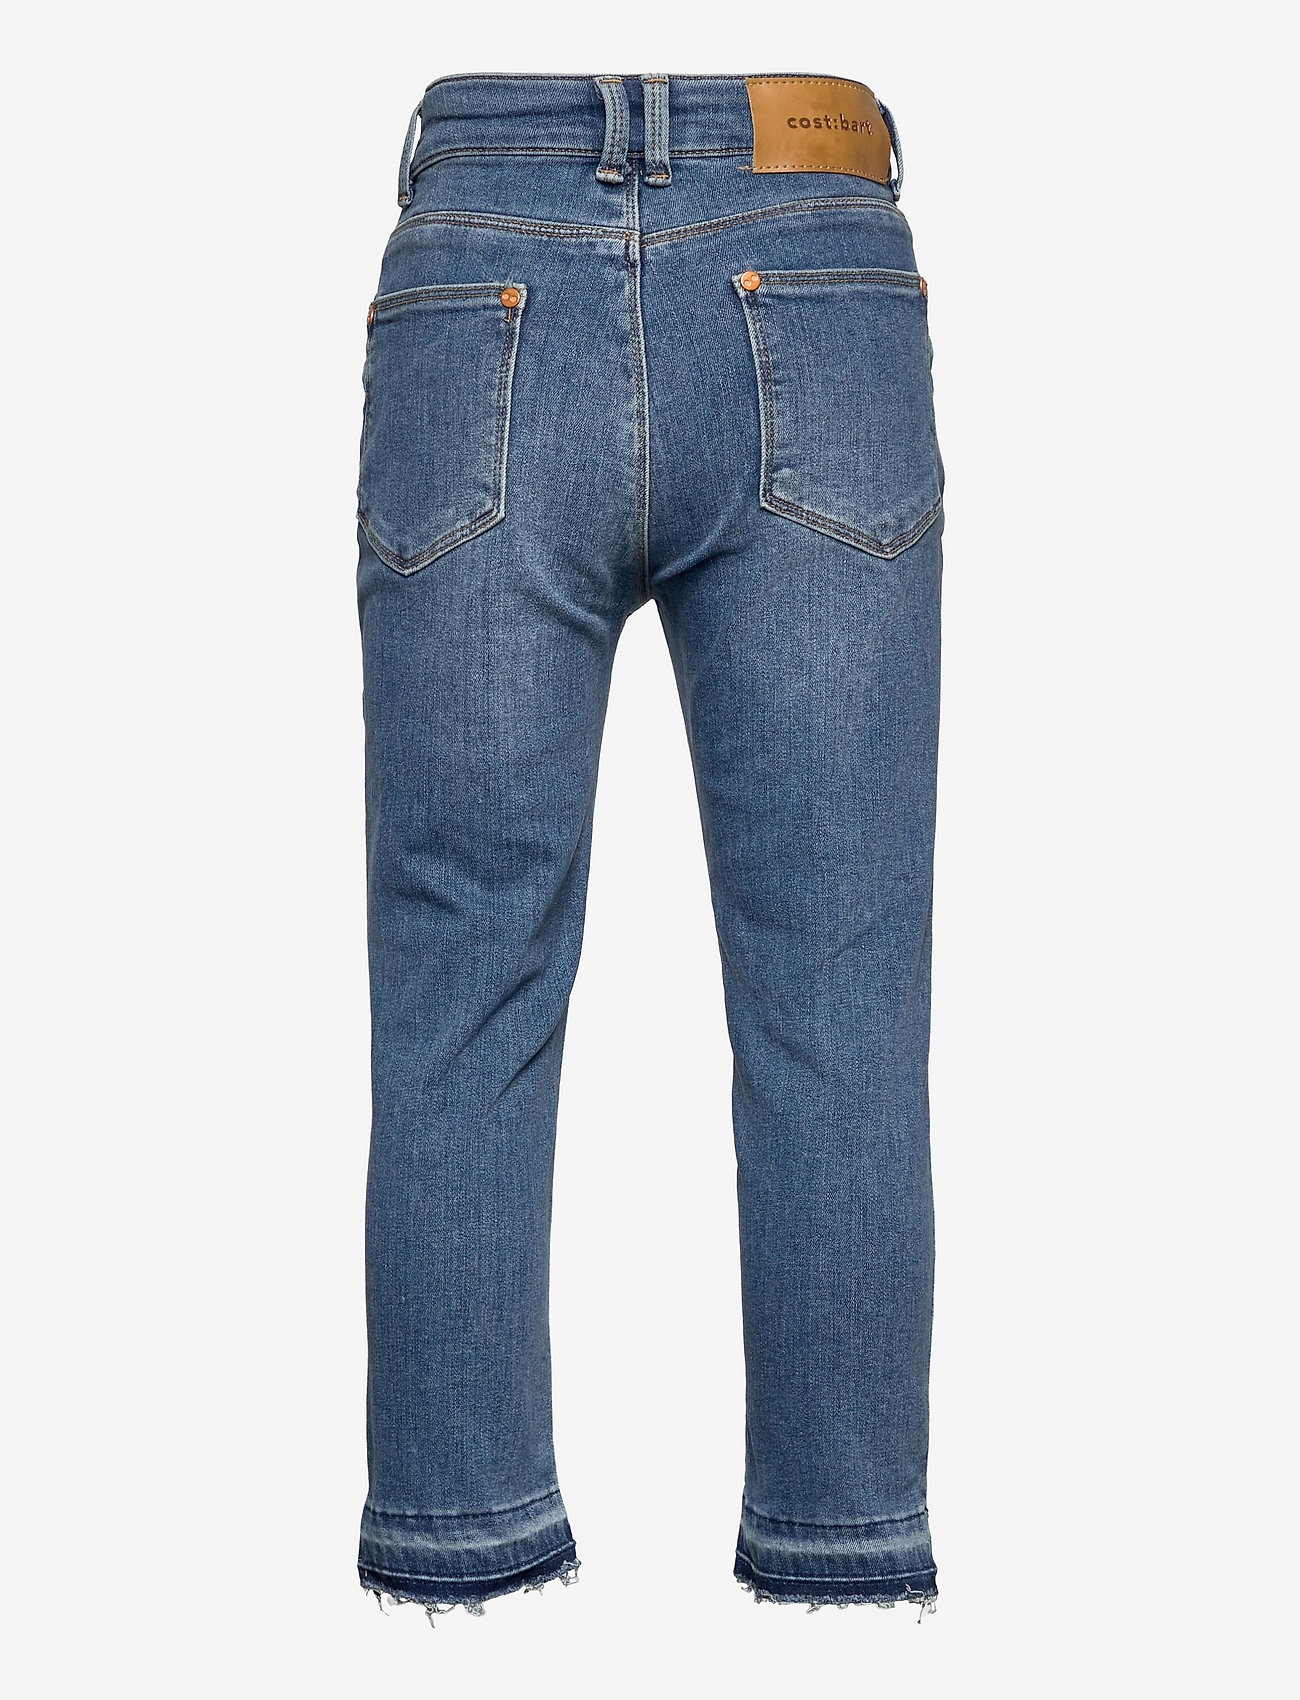 Costbart - CBErna Mom Fit Jeans - Įprasto kirpimo džinsai - medium blue denim wash - 1